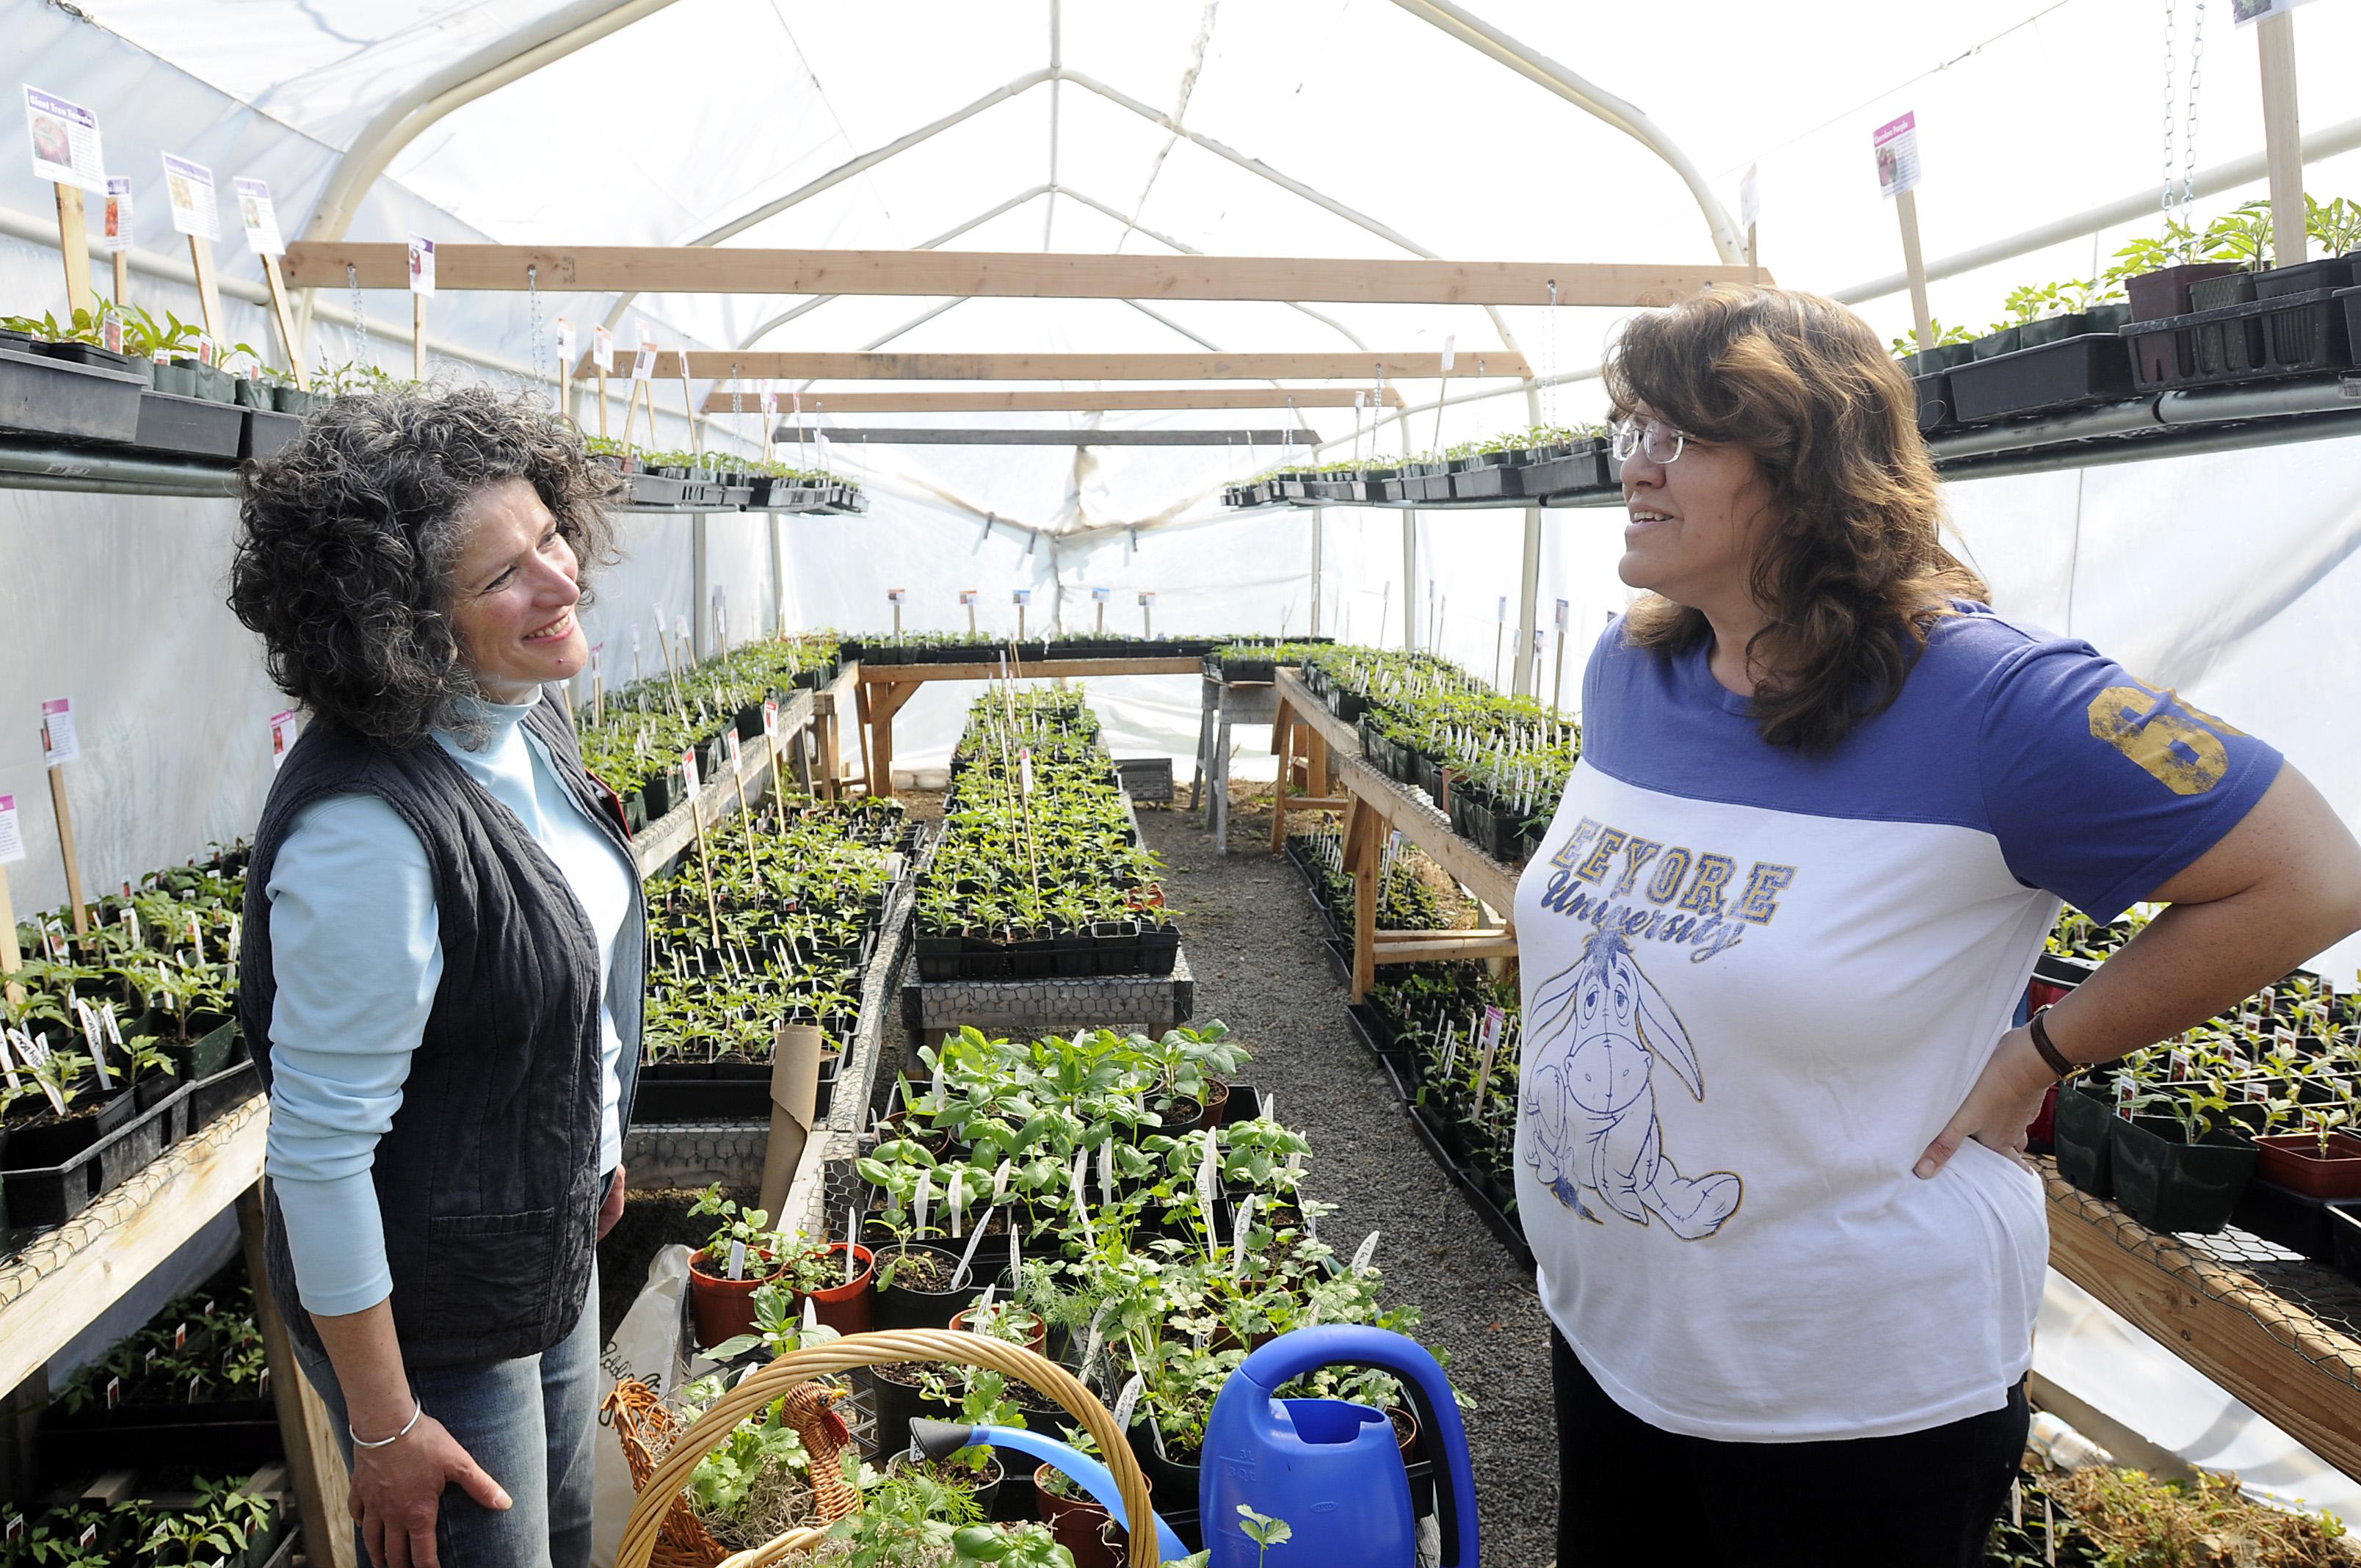 Spokane S Tomato Lady Is Growing Interest In Raising Produce The